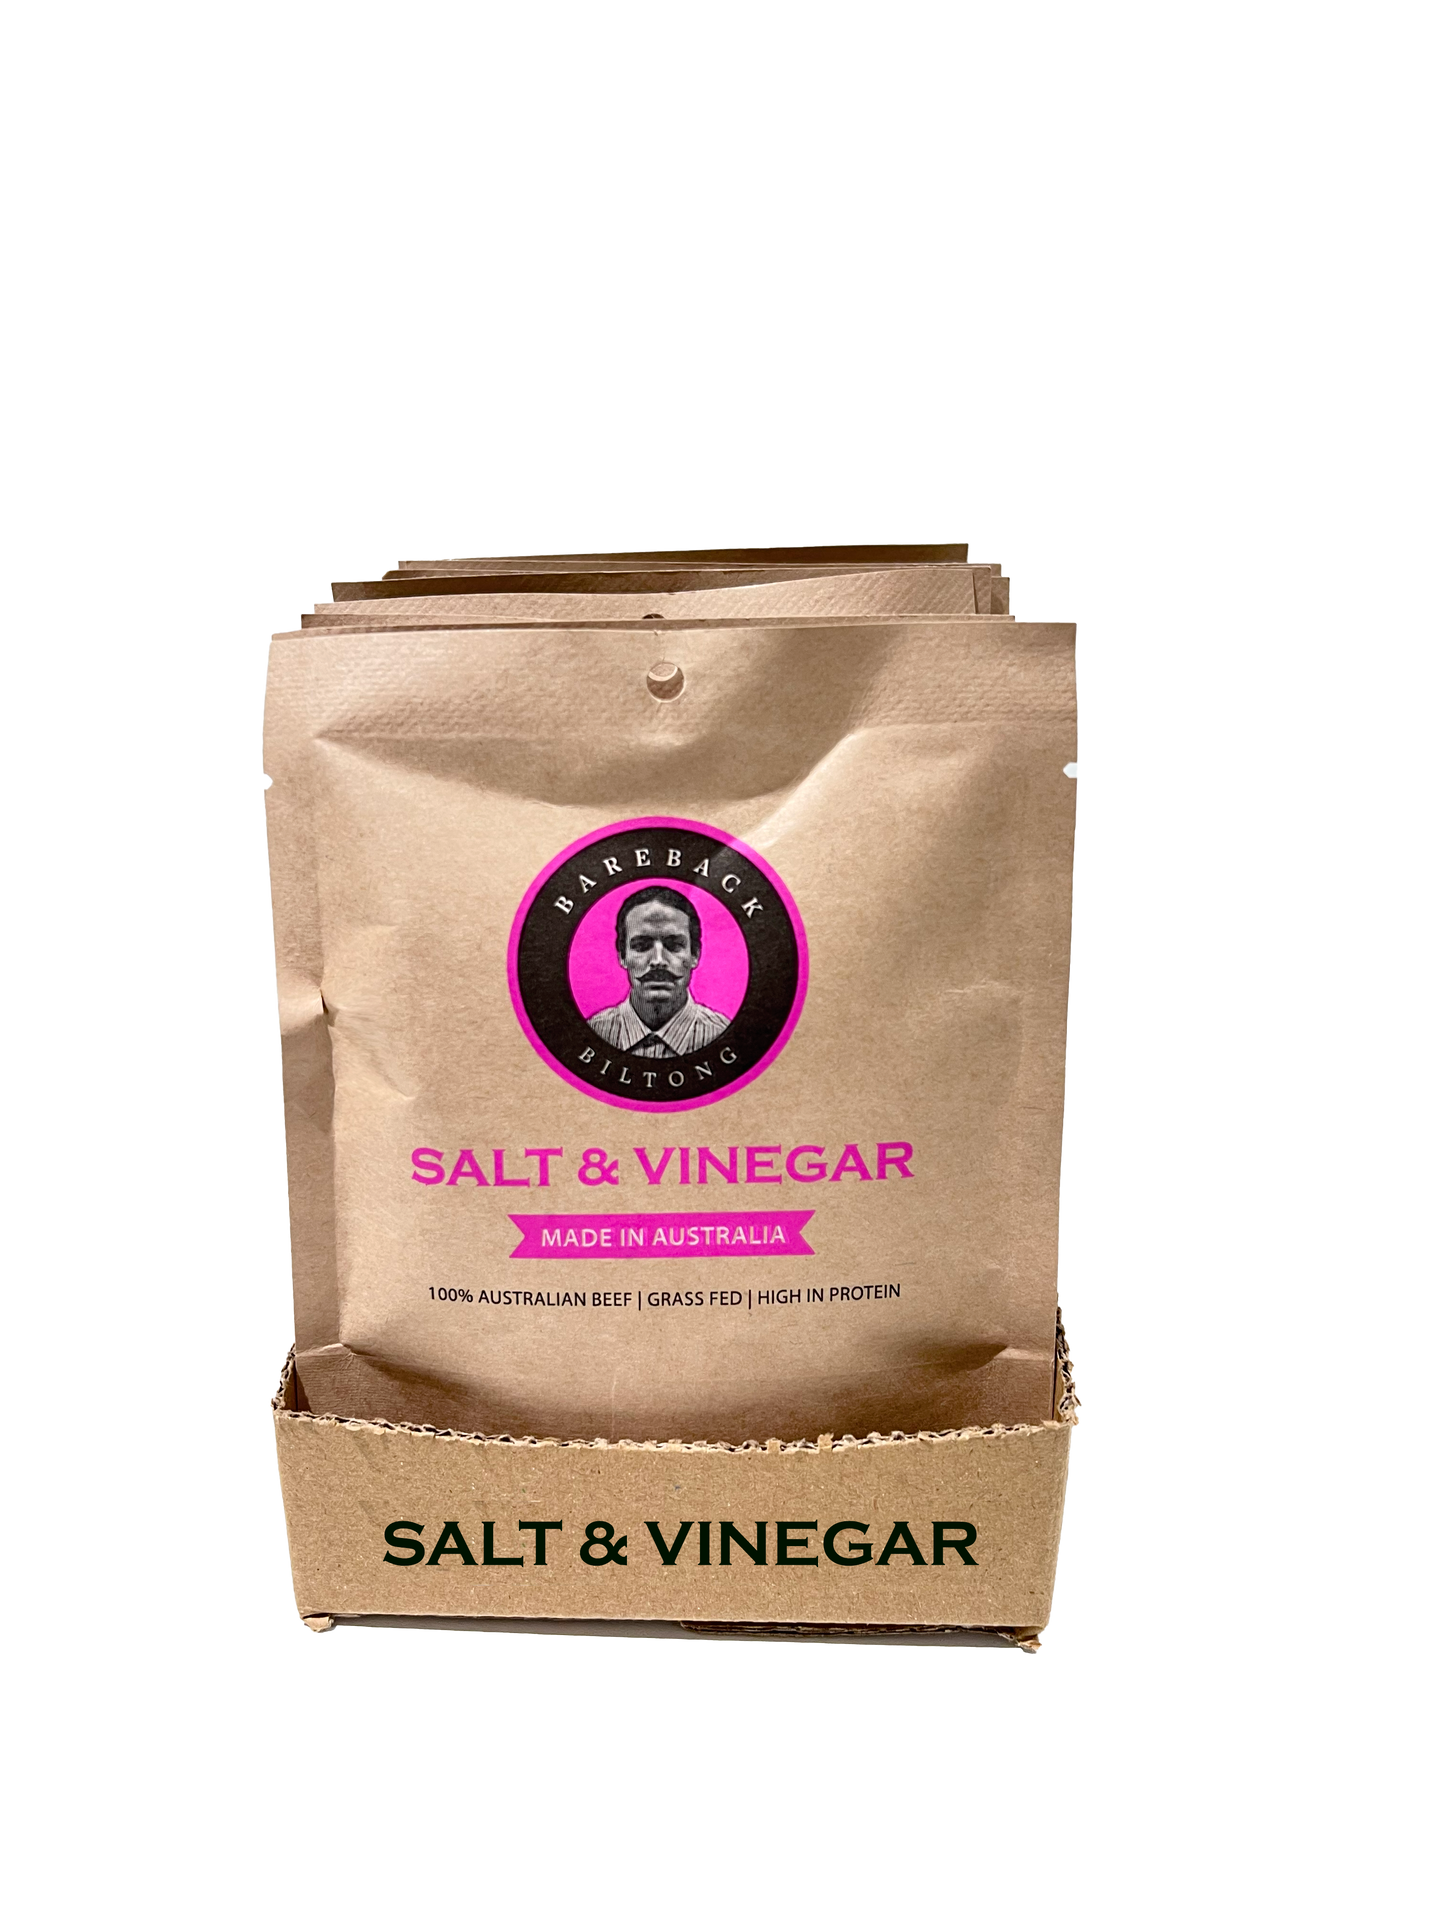 35g Salt & Vinegar Biltong Box